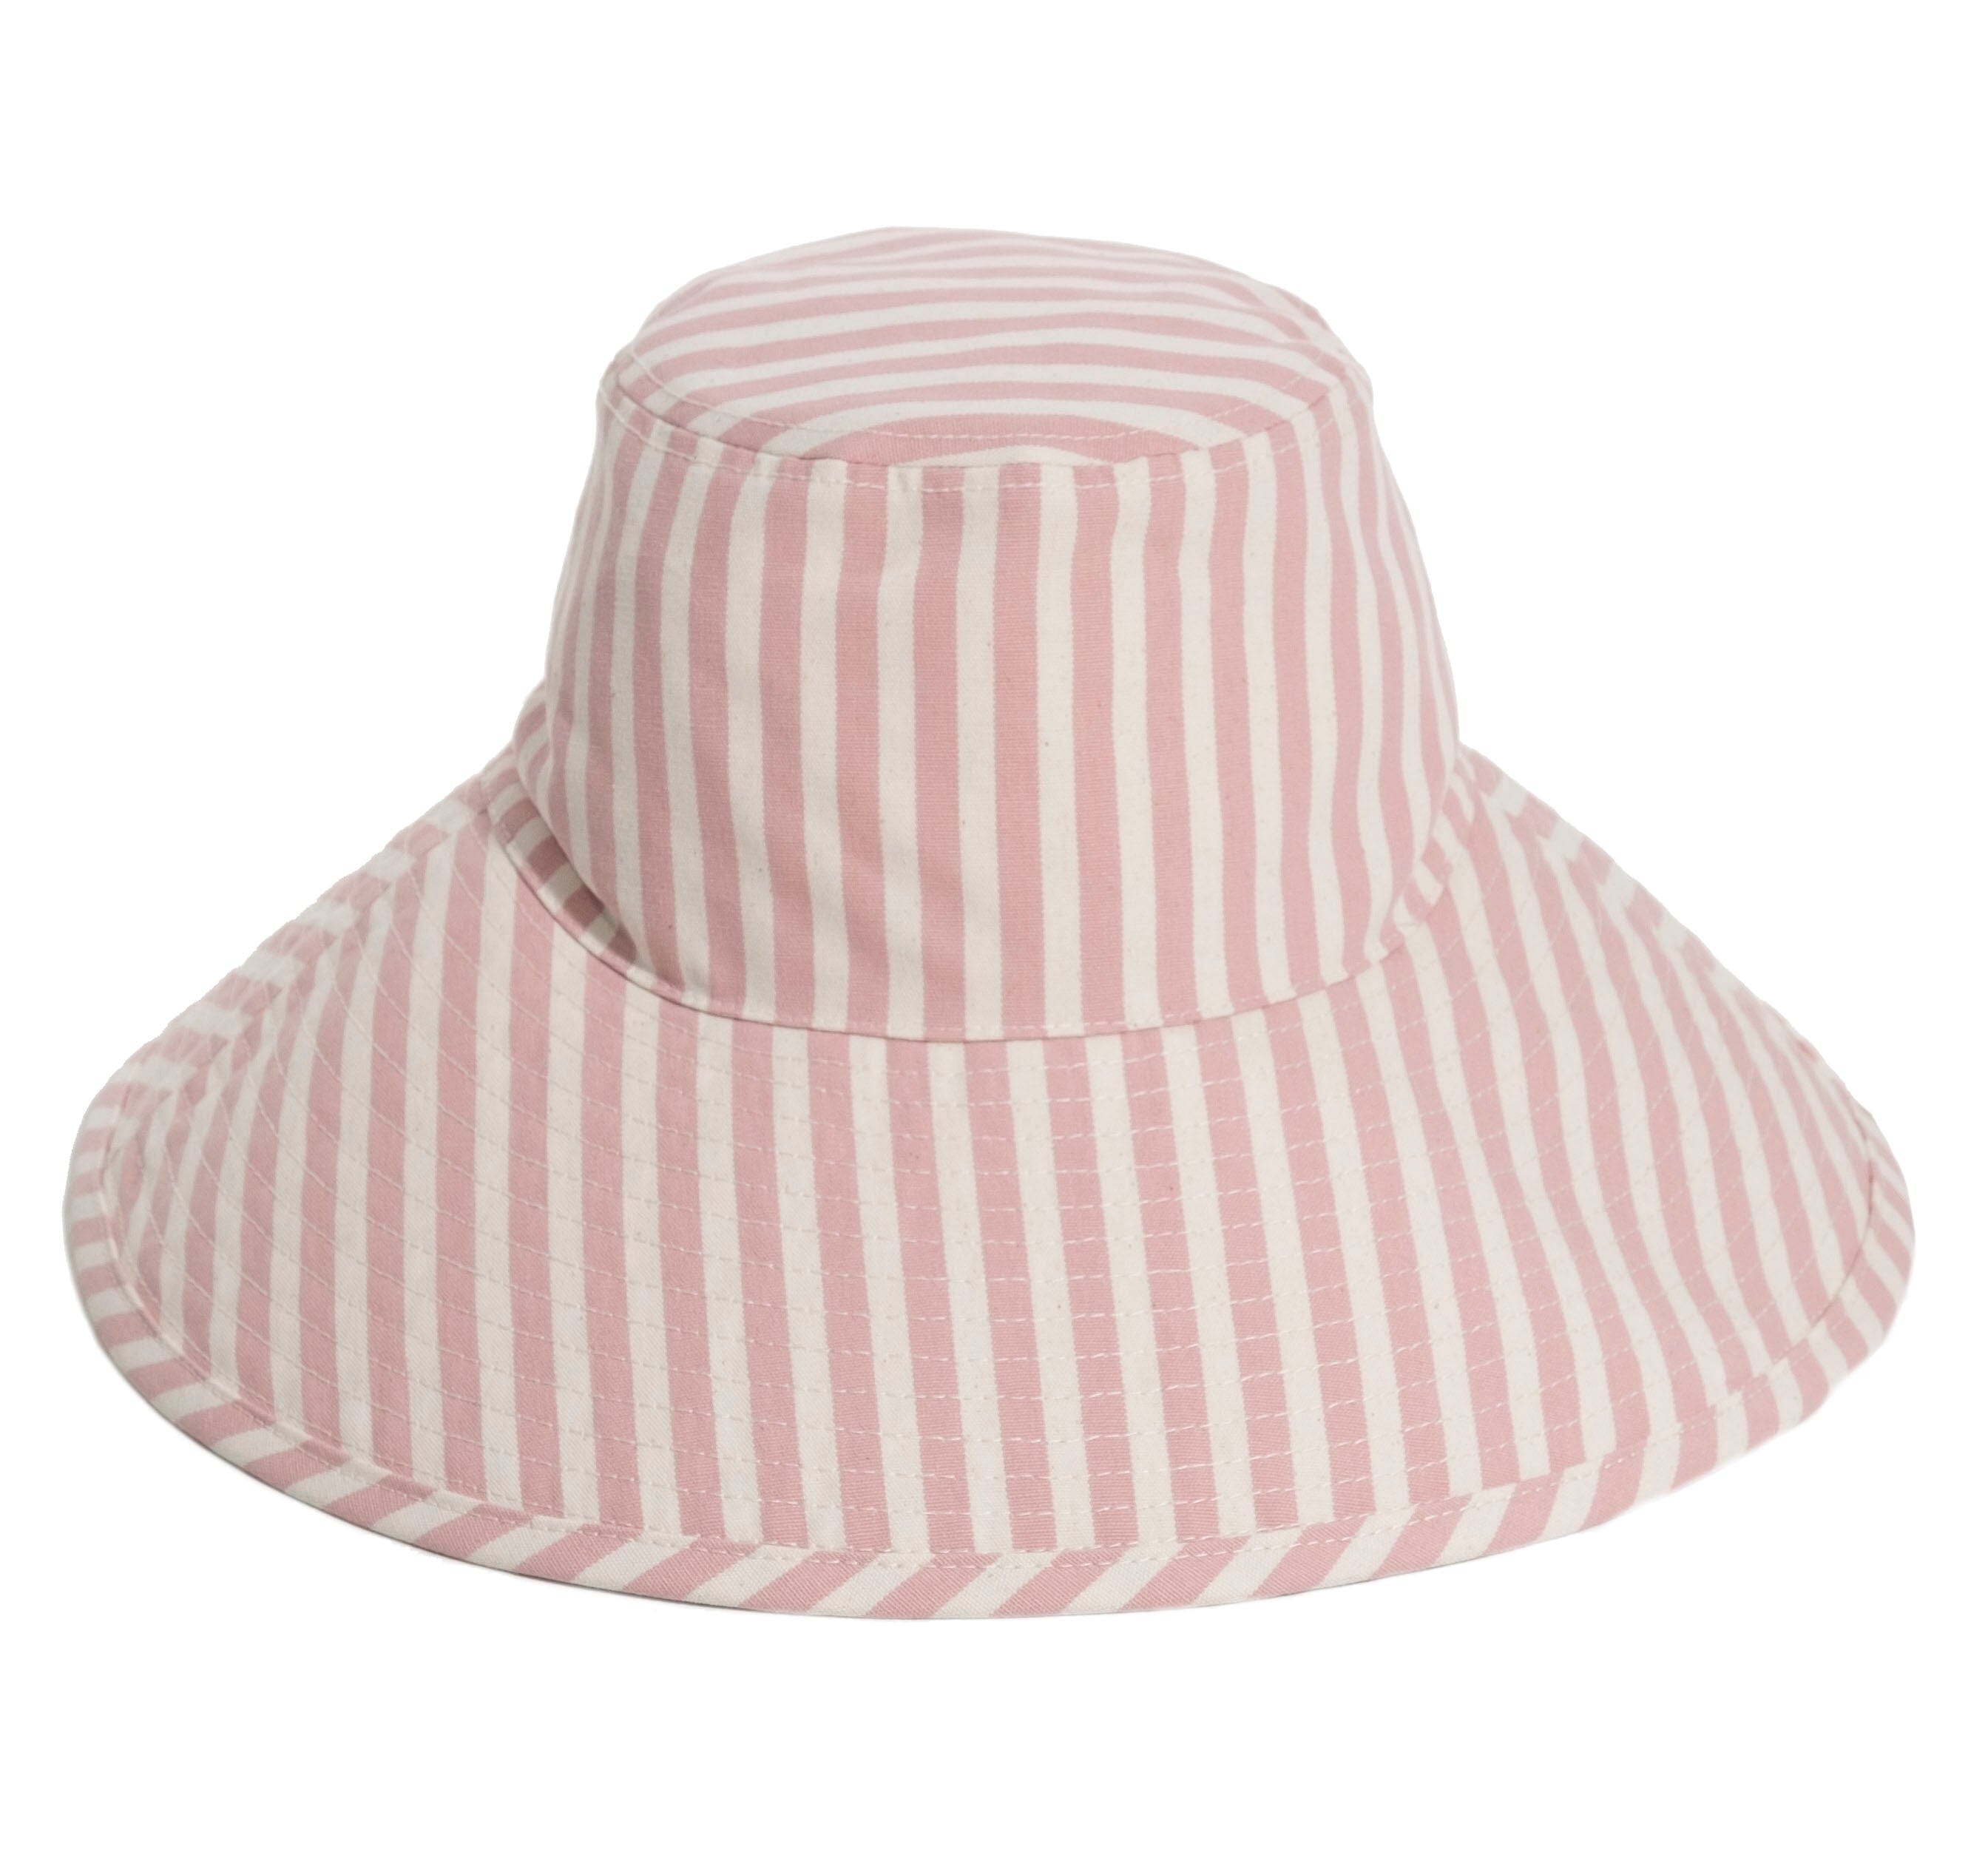 The Wide Brim Hat - Lauren's Pink Stripe